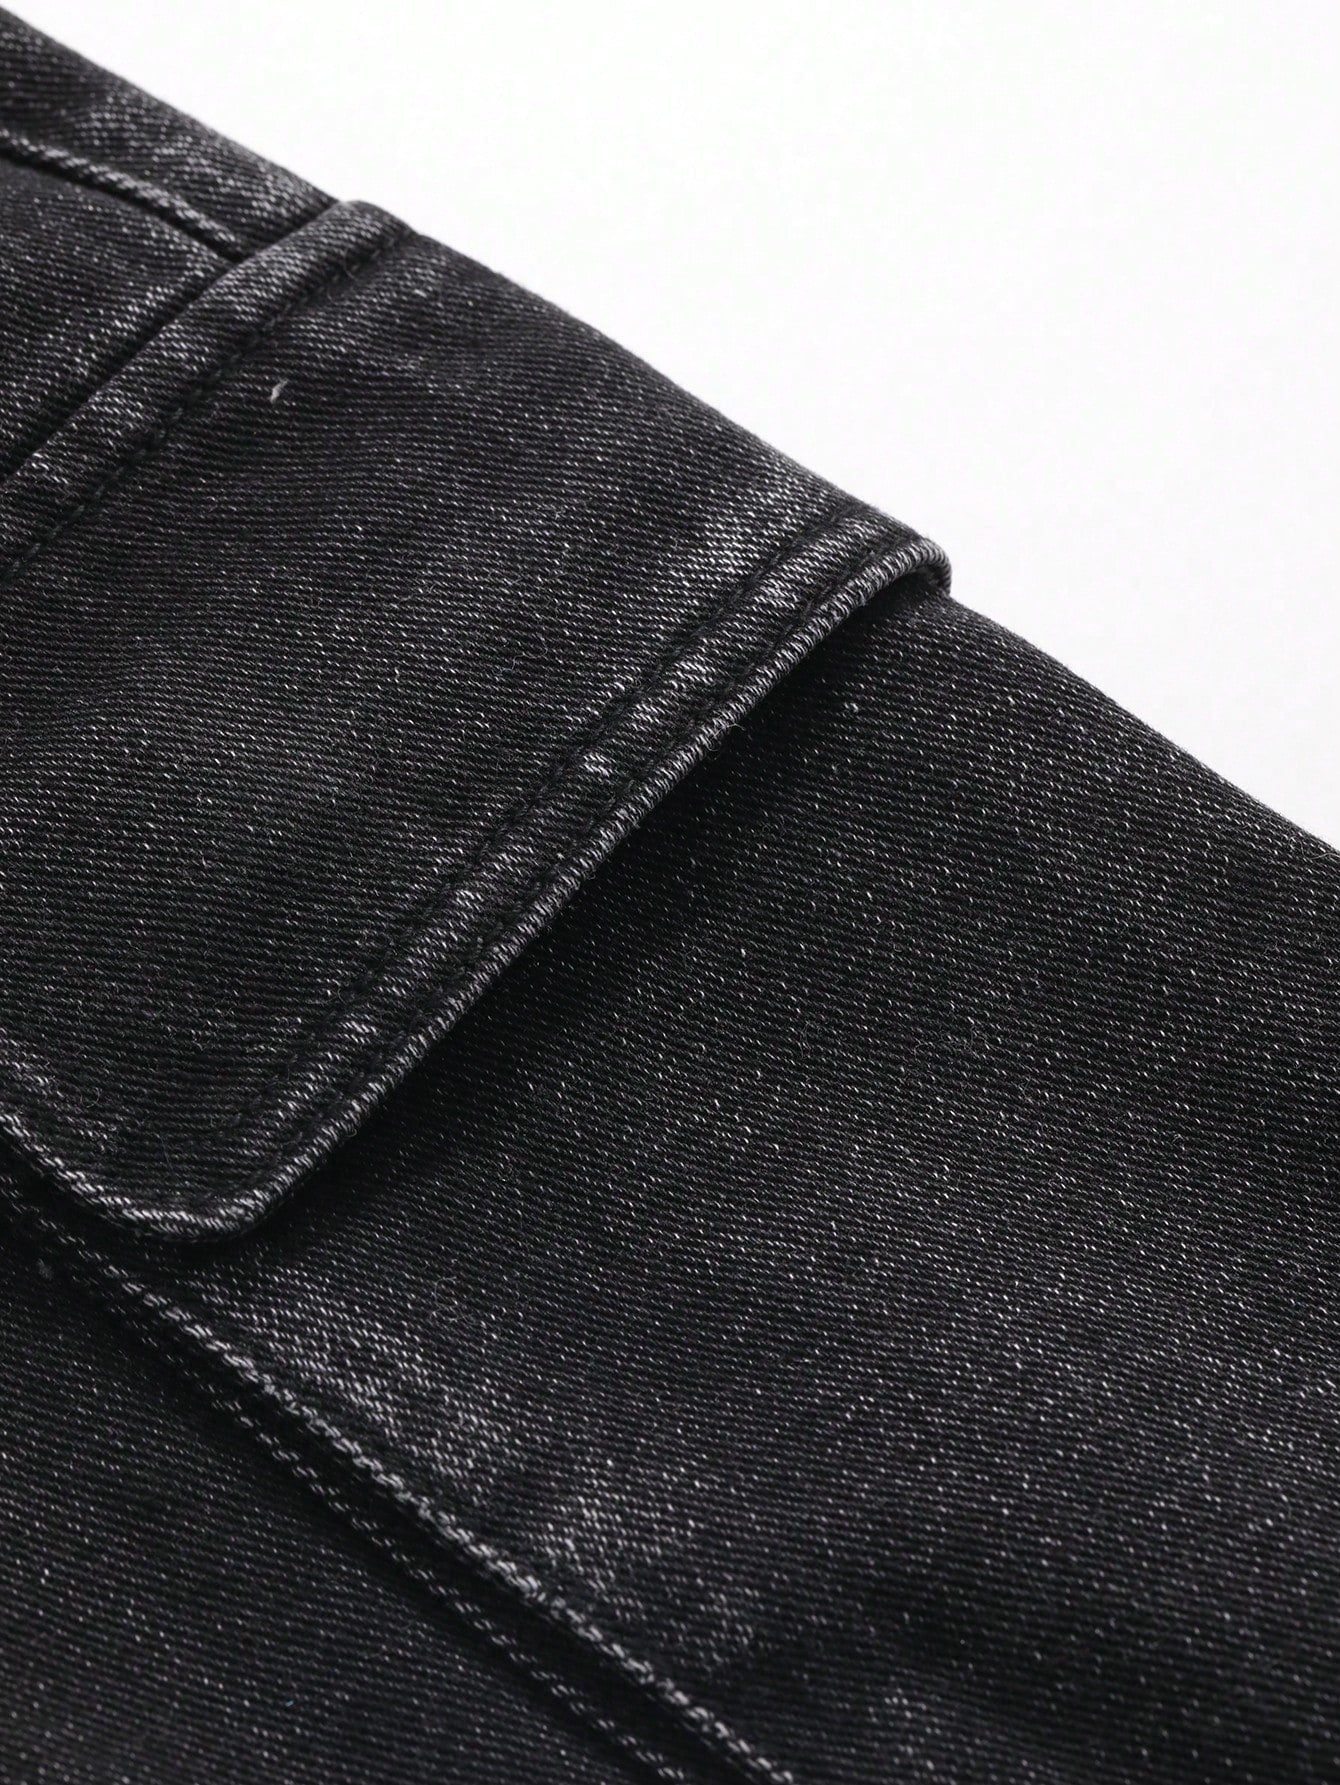 Women's Workwear Style Denim Pants With Pockets